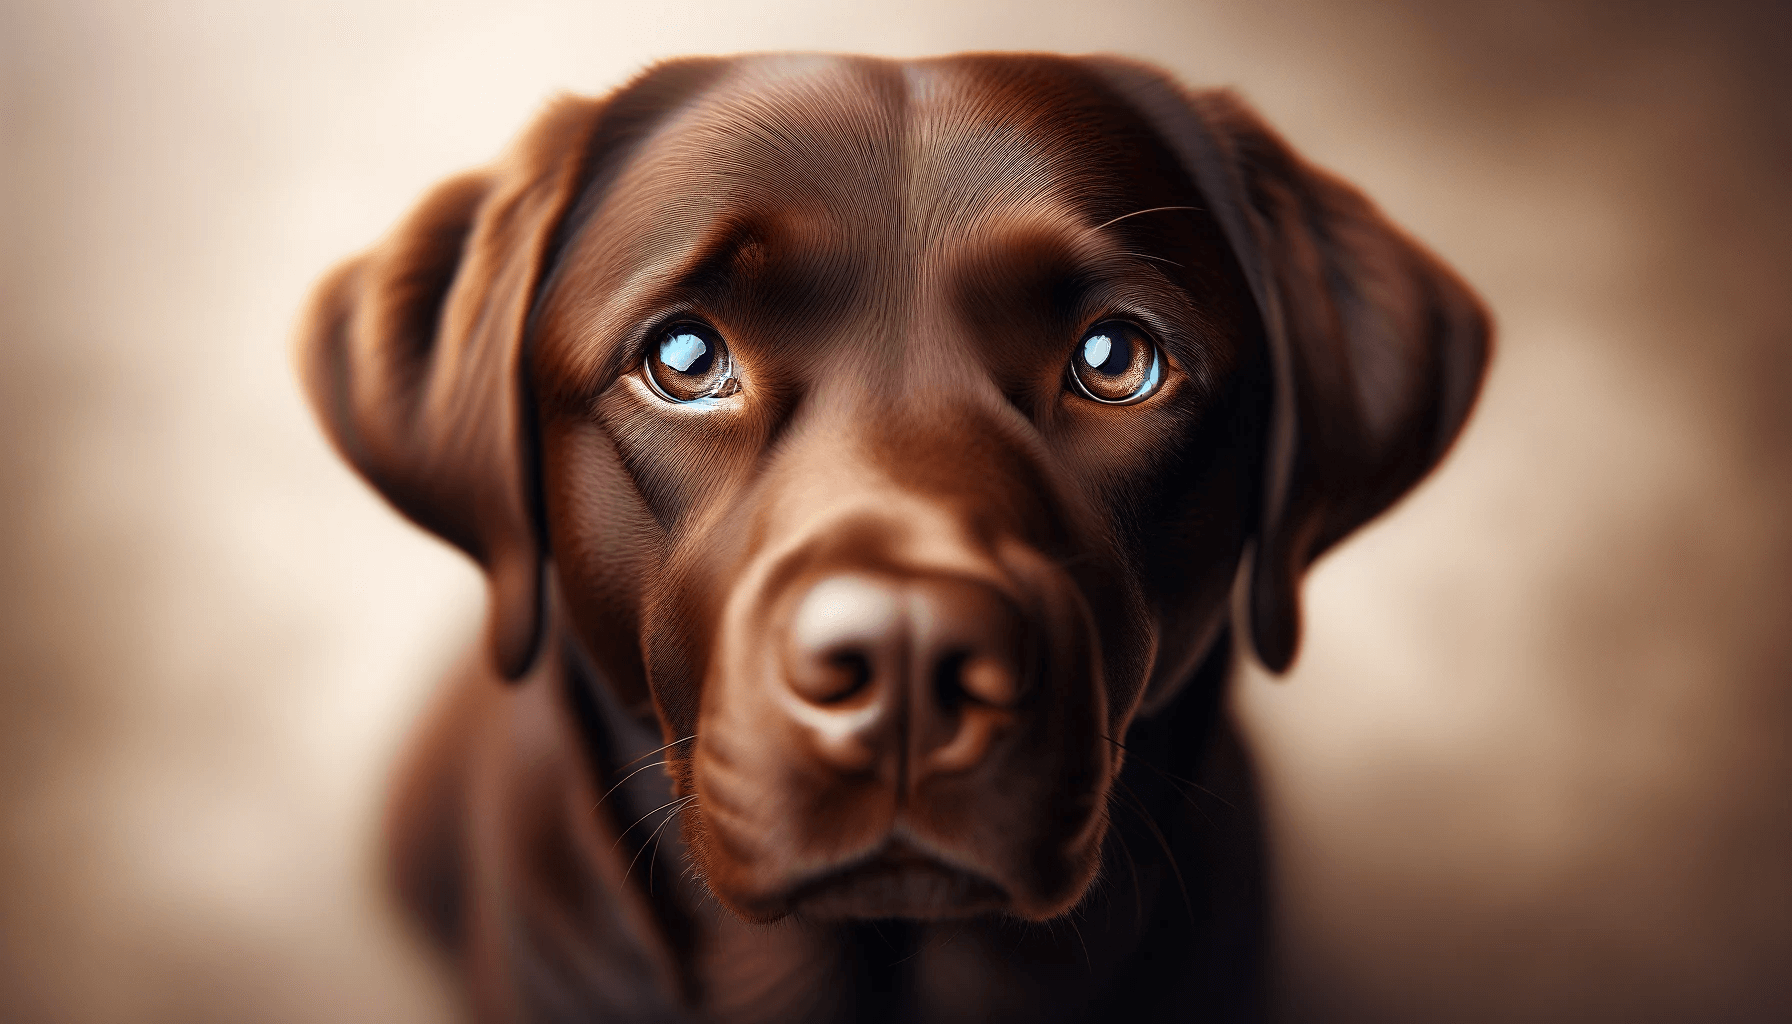 Expressive eyes of a Chocolate Labrador Retriever, highlighting their friendly and playful demeanor.